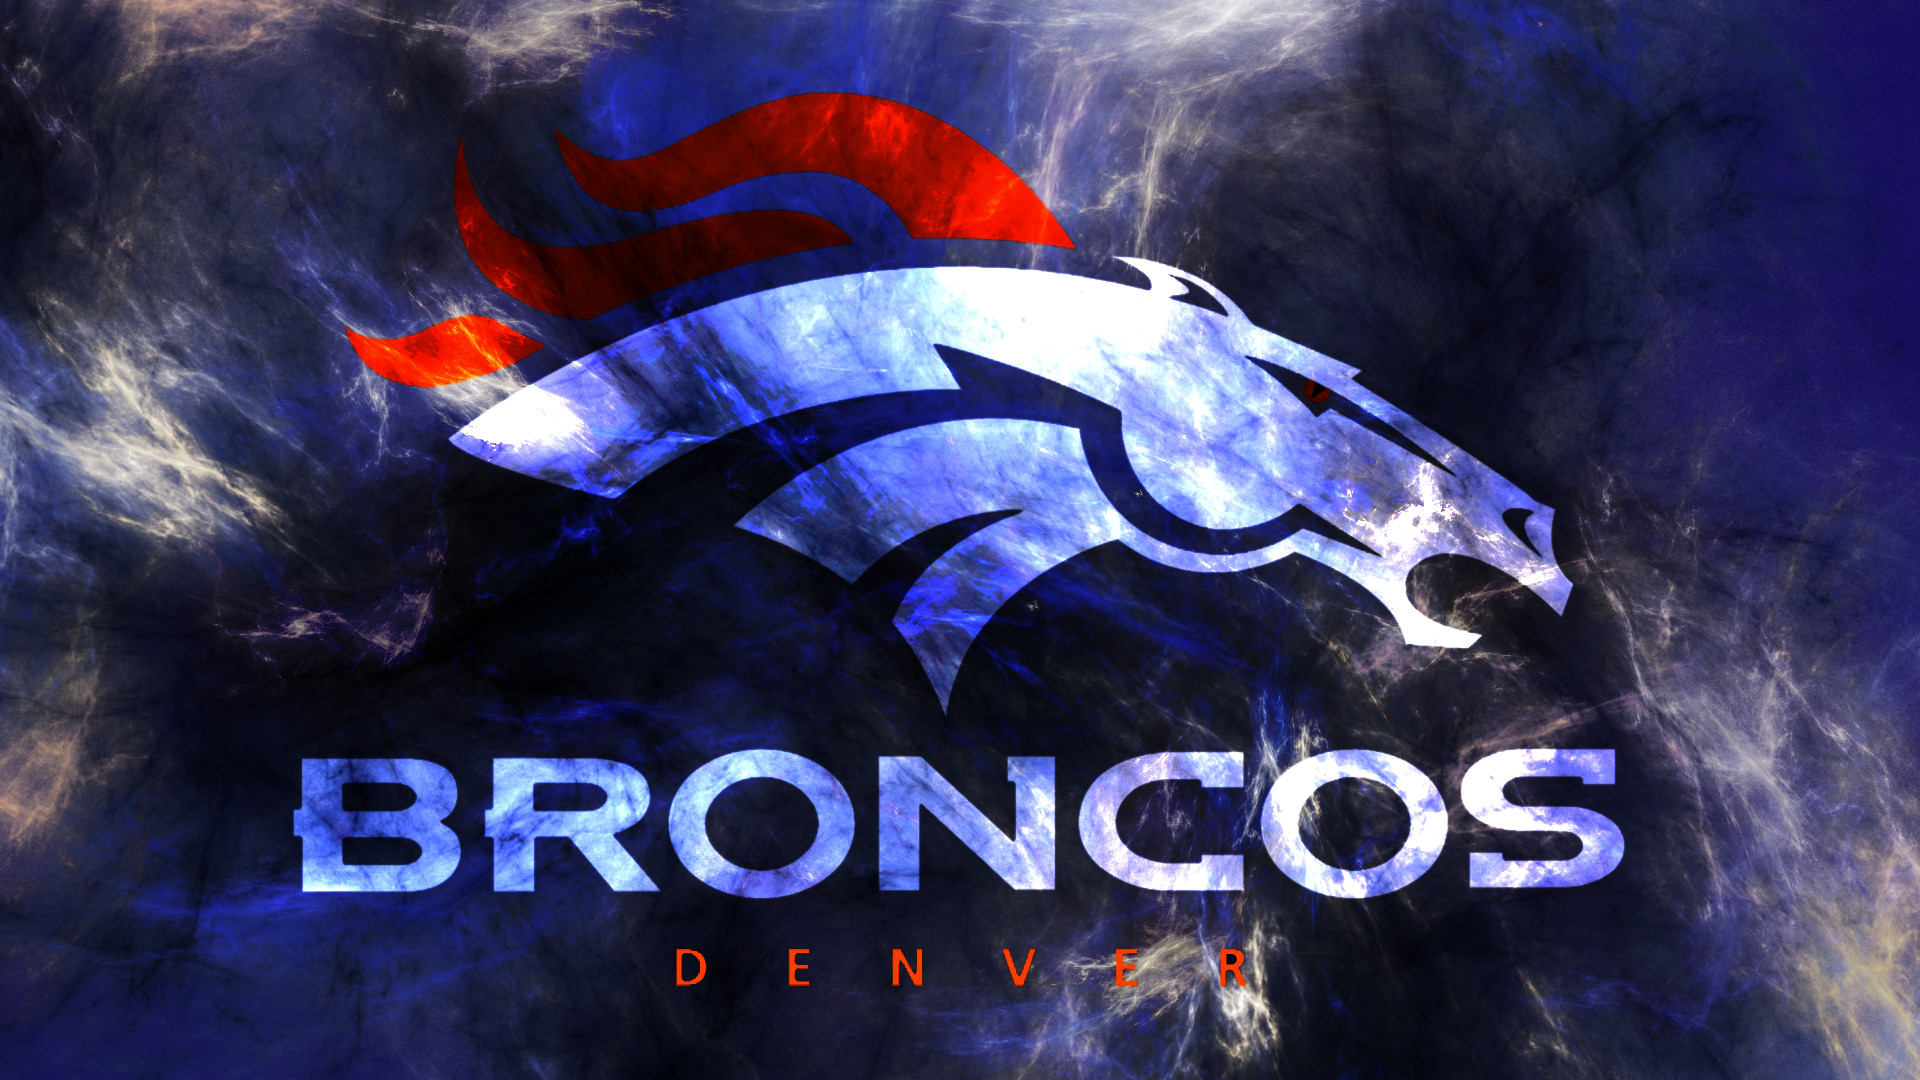 Denver Broncos Wallpaper HD Image Amp Pictures Becuo